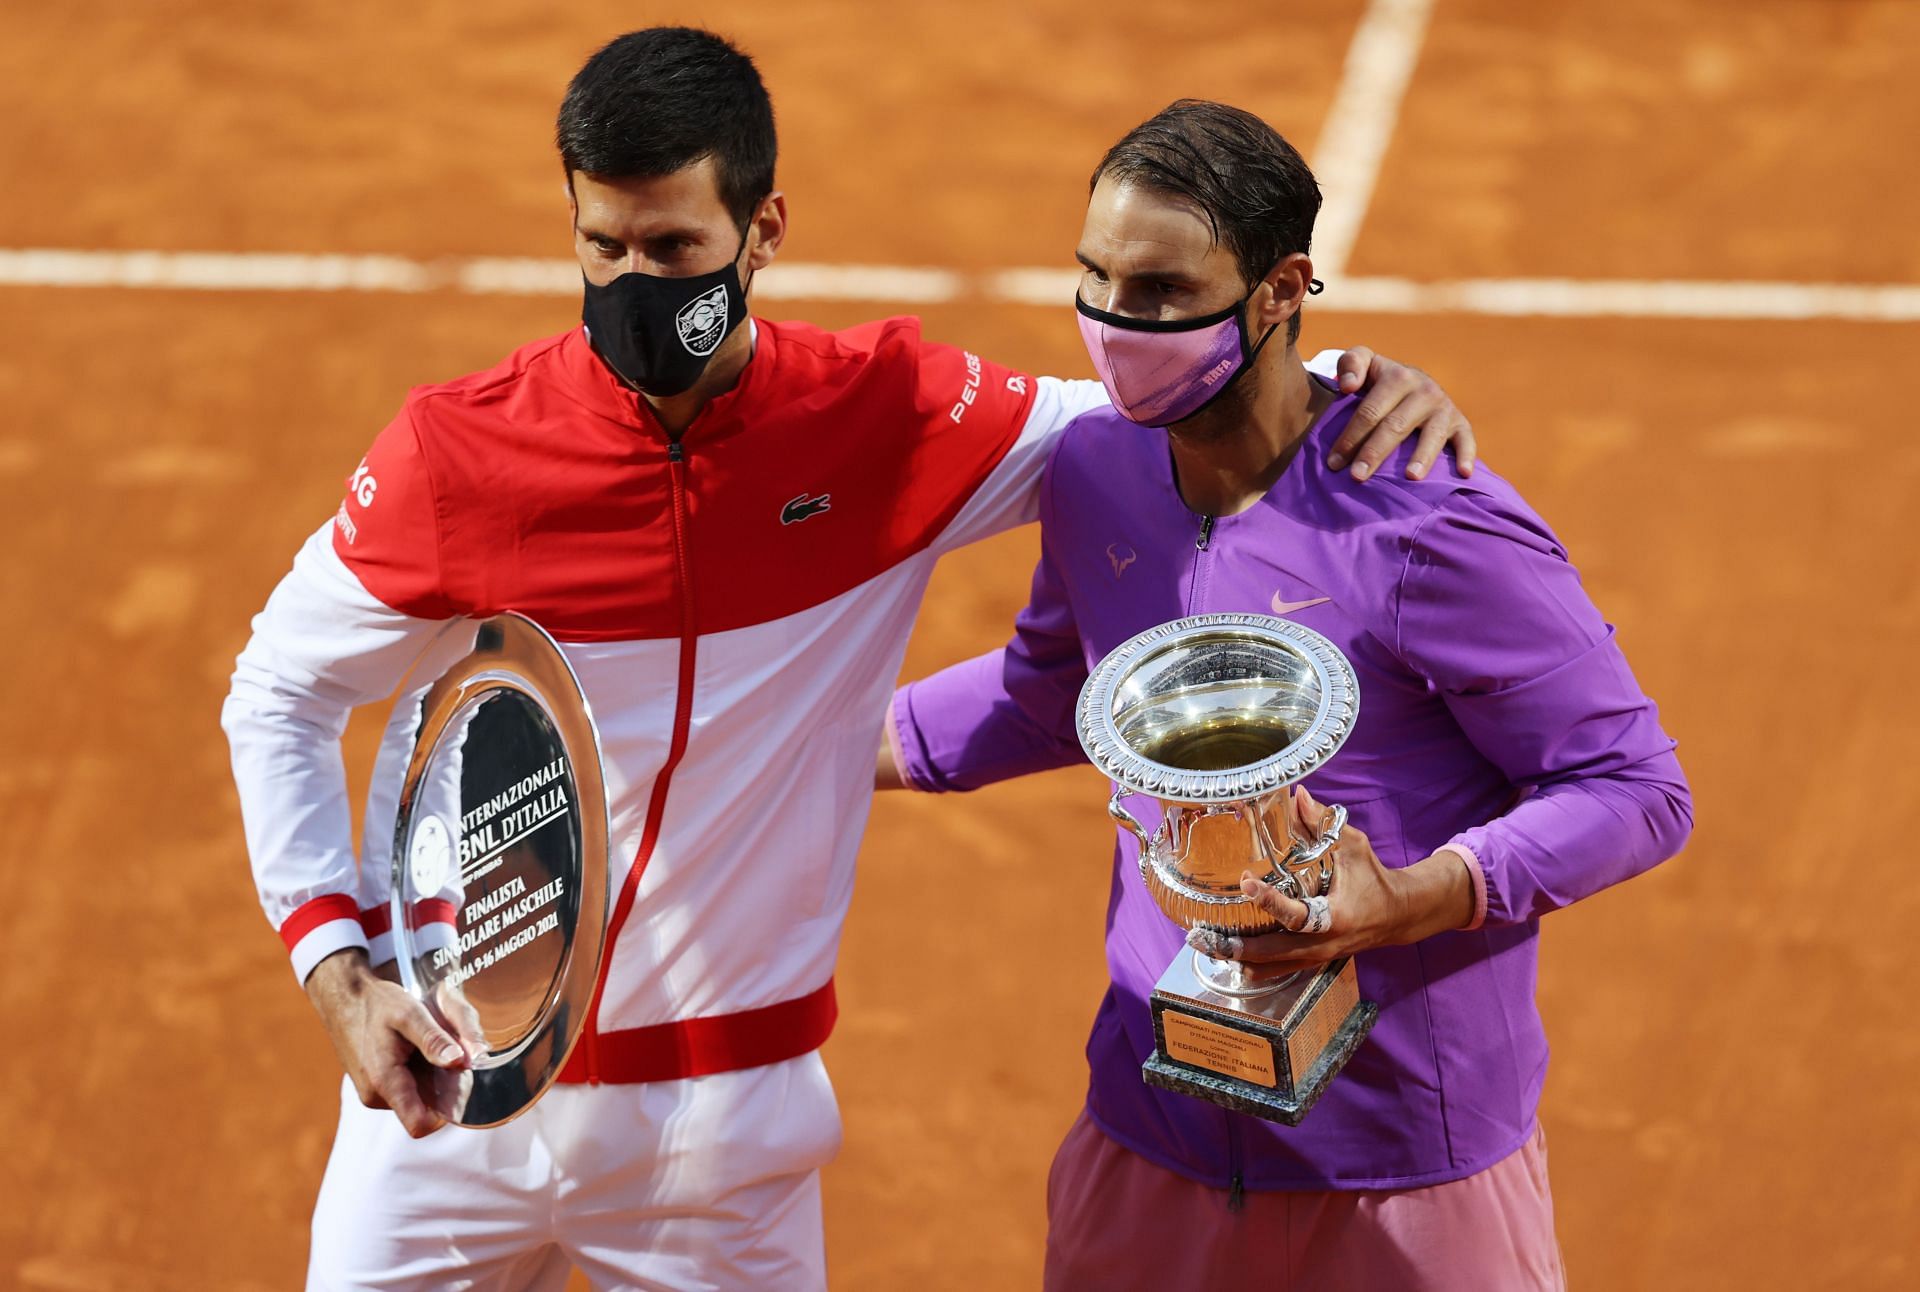 Novak Djokovic and Rafael Nadal at the Italian Open 2021